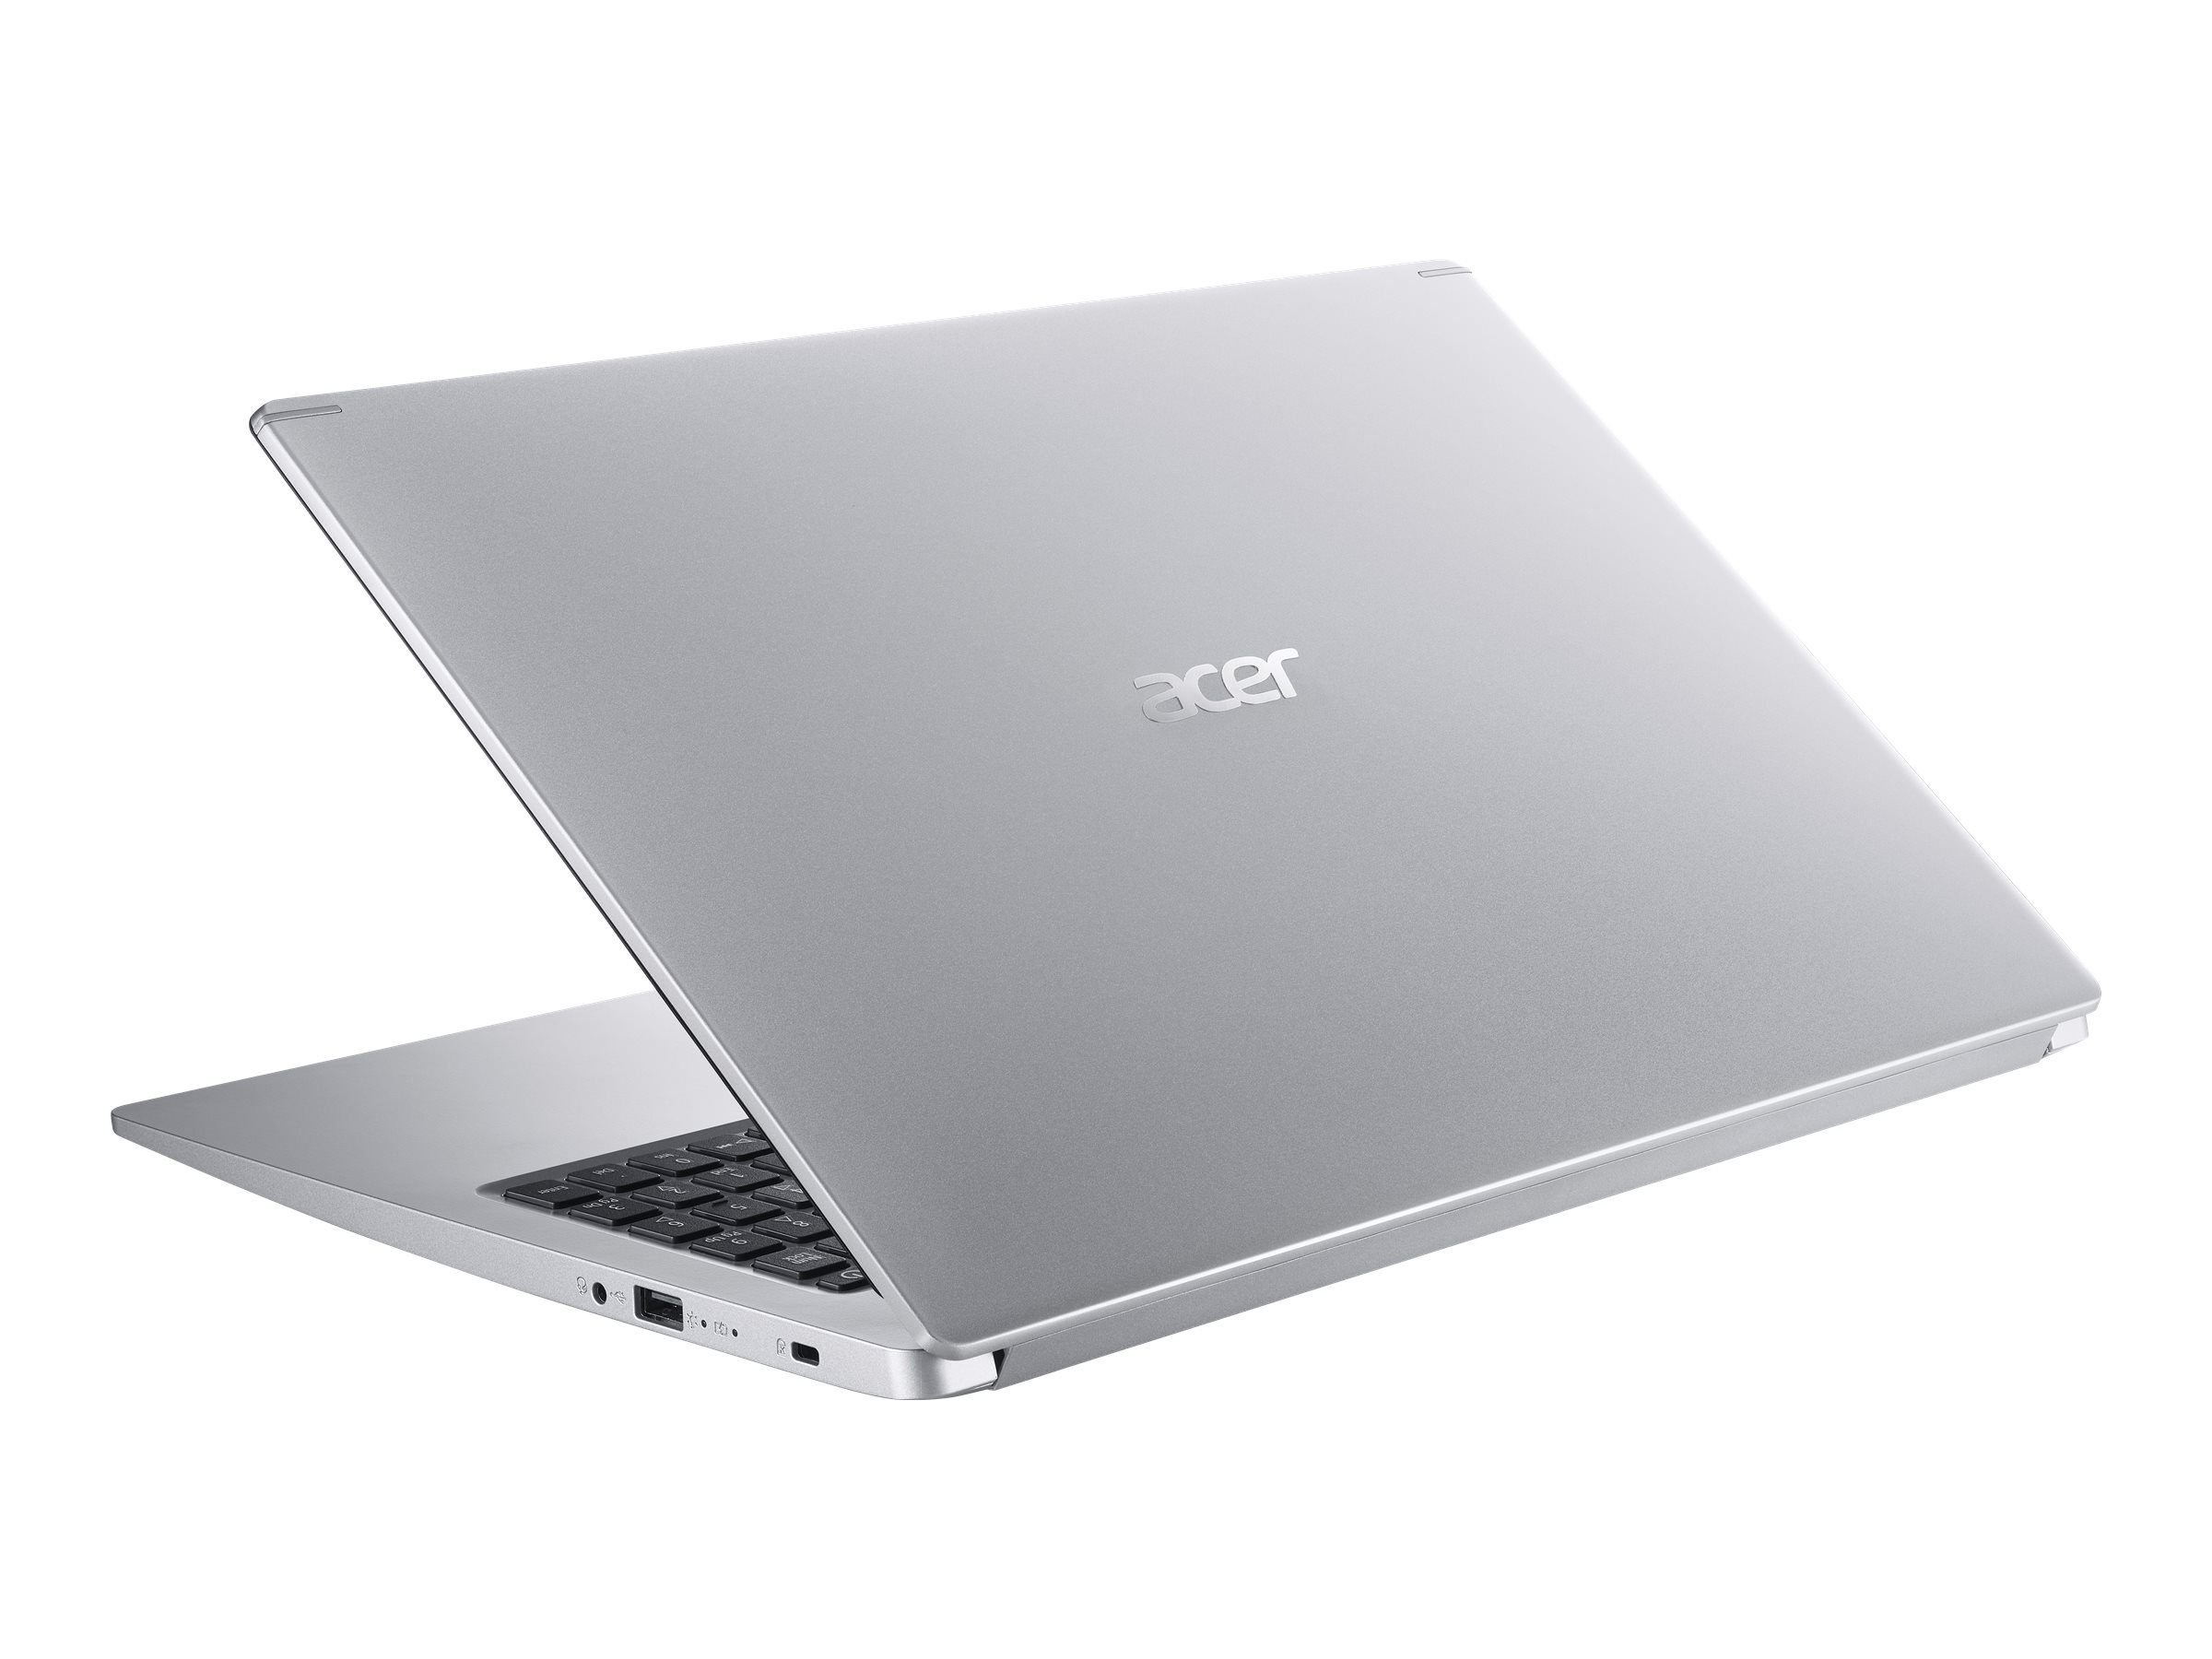 Acer Aspire 5 A515-54-37U3 - Intel Core i3 10110U / 2.1 GHz - Windows 10 Home 64-bit in S mode - UHD Graphics - 4 GB RAM - 128 GB SSD NVMe - 15.6" IPS 1920 x 1080 (Full HD) - Wi-Fi 5 - pure silver - kbd: US Intl - image 5 of 7